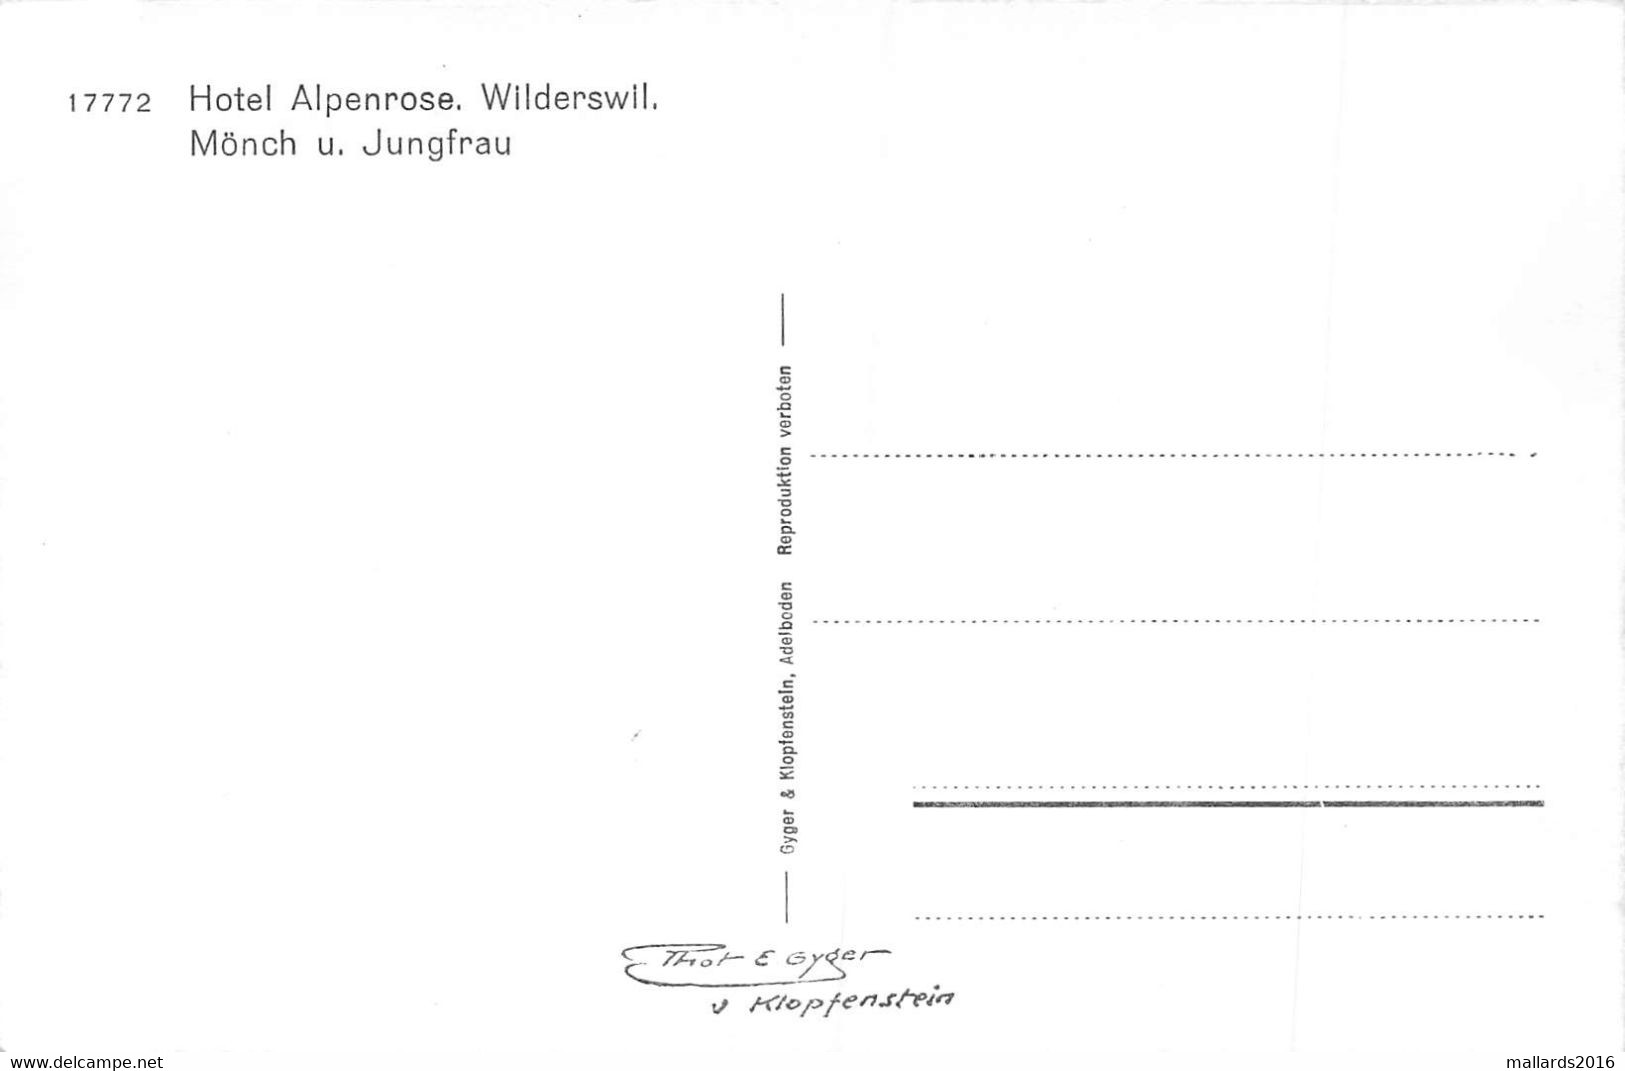 WILDERSWIL - HOTEL ALPENROSE ~ AN OLD REAL PHOTO POSTCARD #223530 - Wilderswil